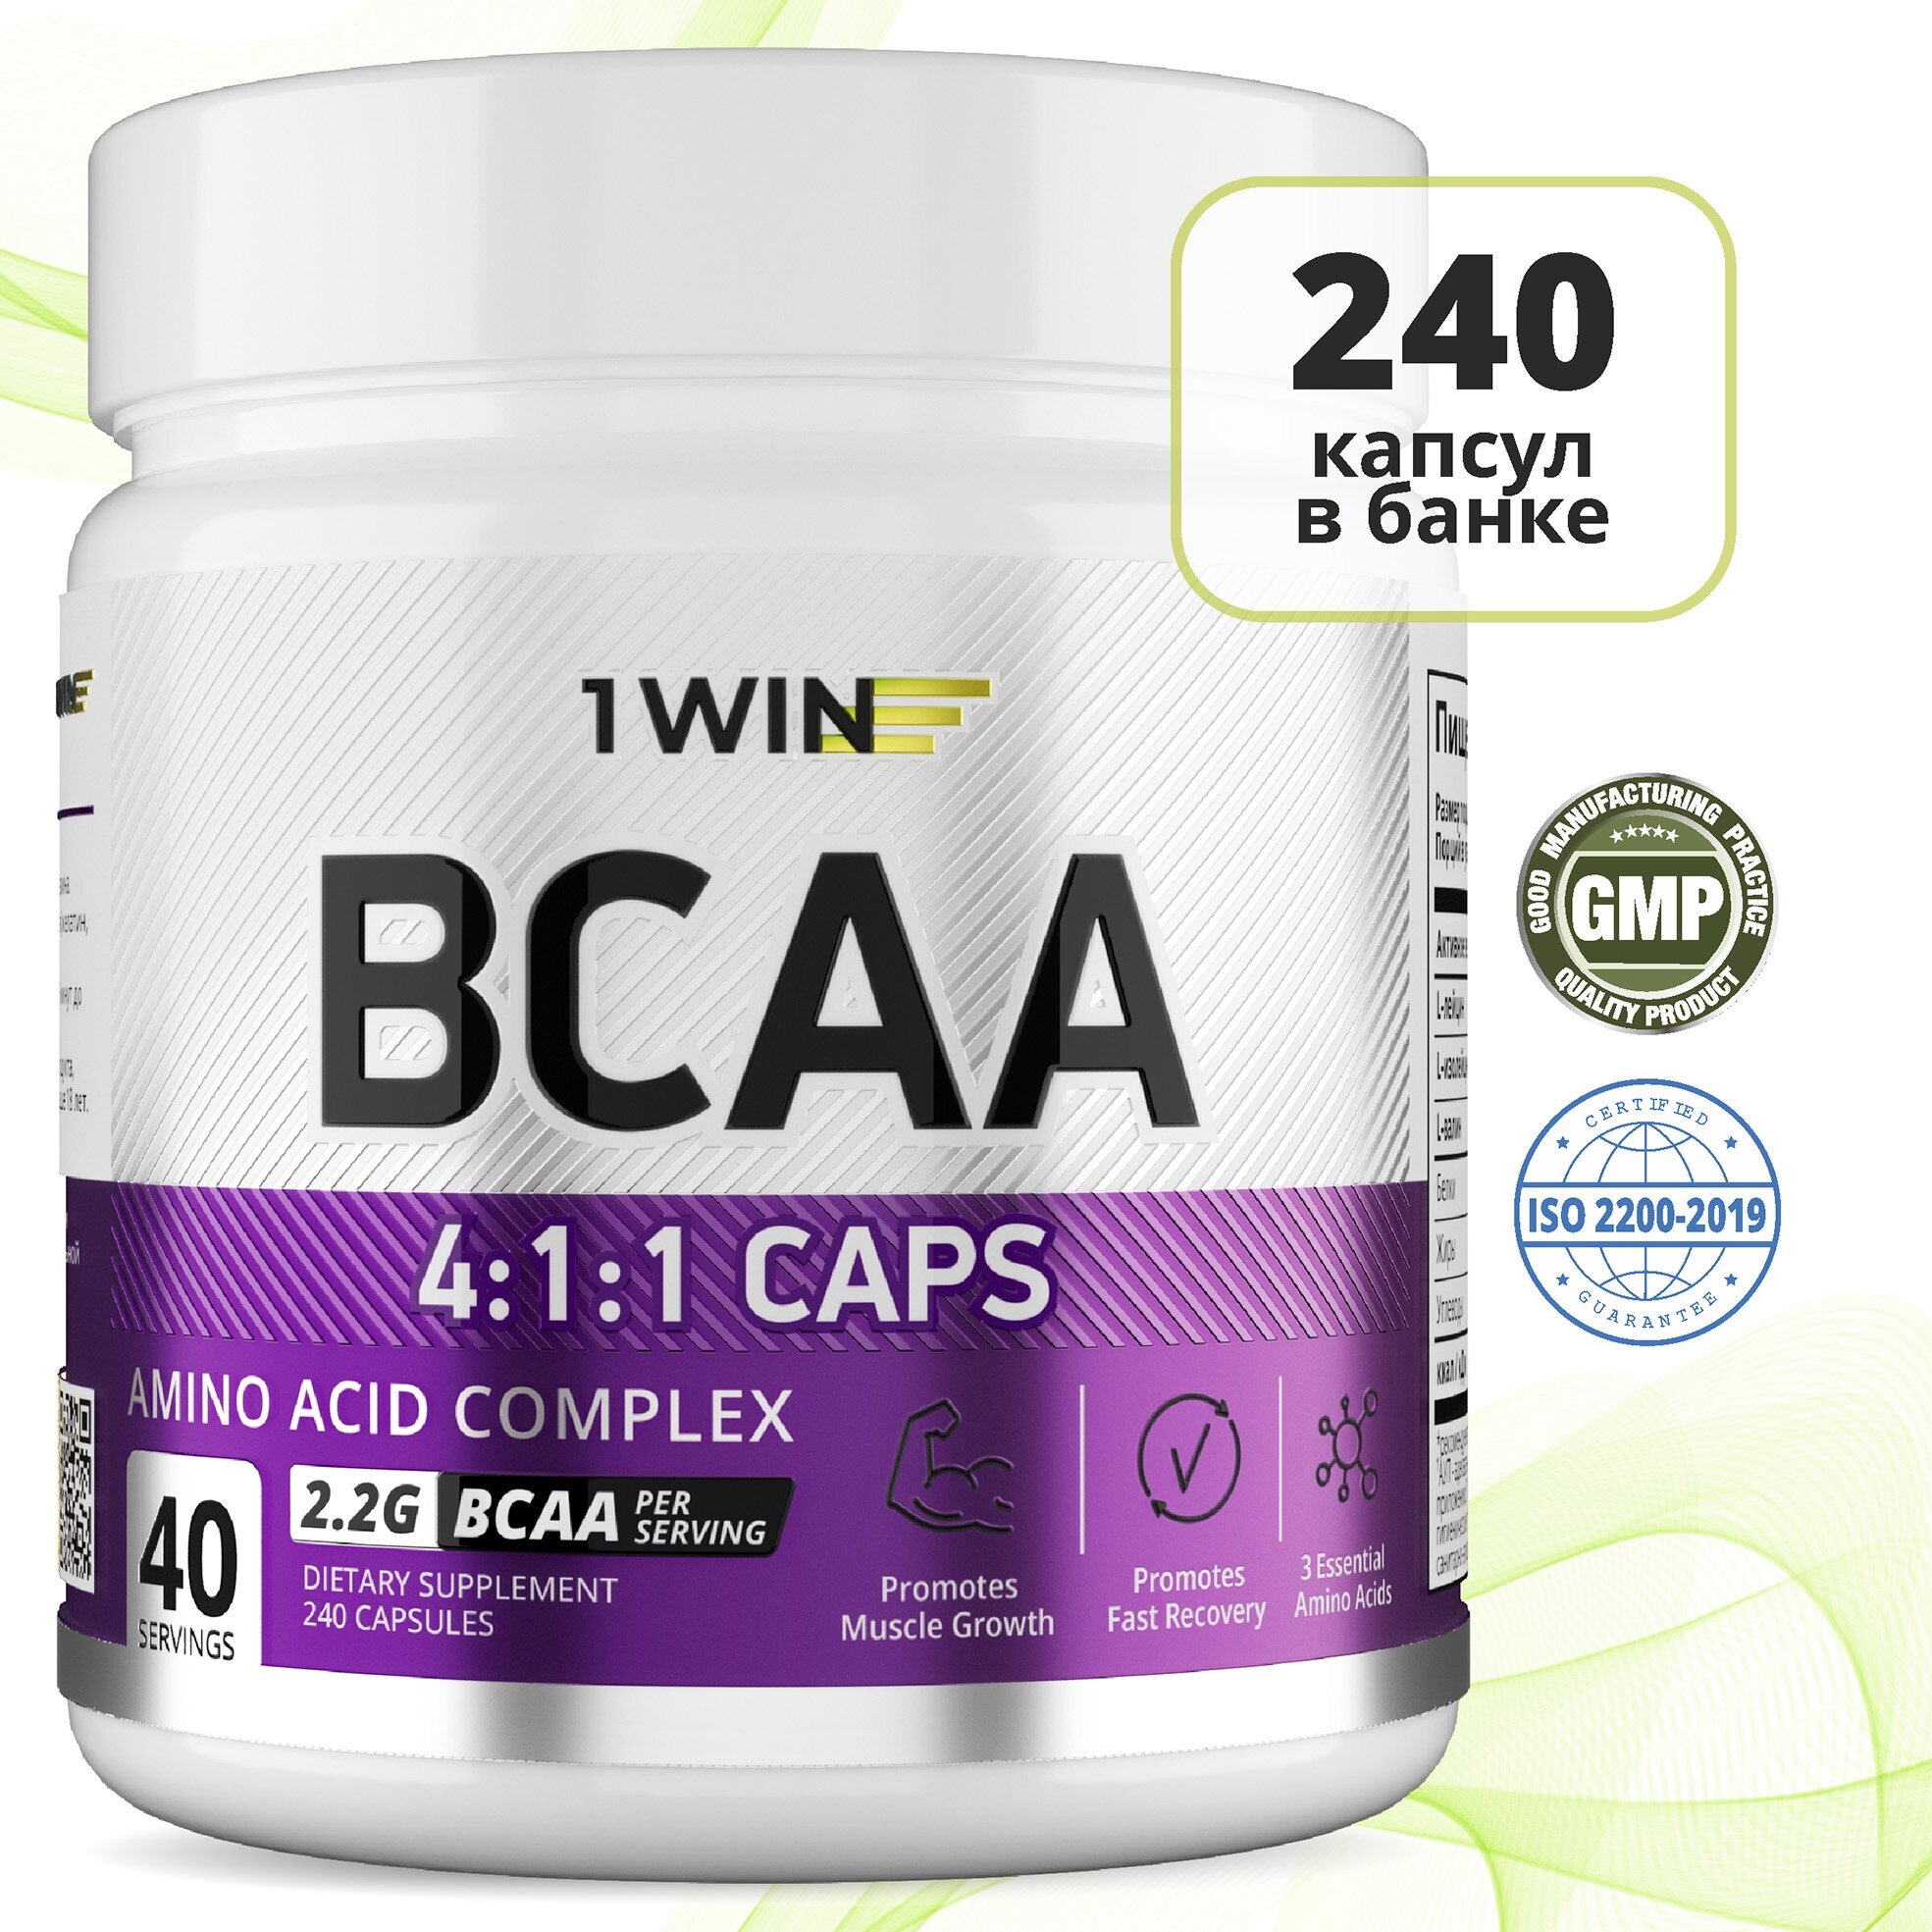 BCAA 4:1:1 в капсулах 1WIN, незаменимые аминокислоты, БЦАА, БЦА, 240 капсул